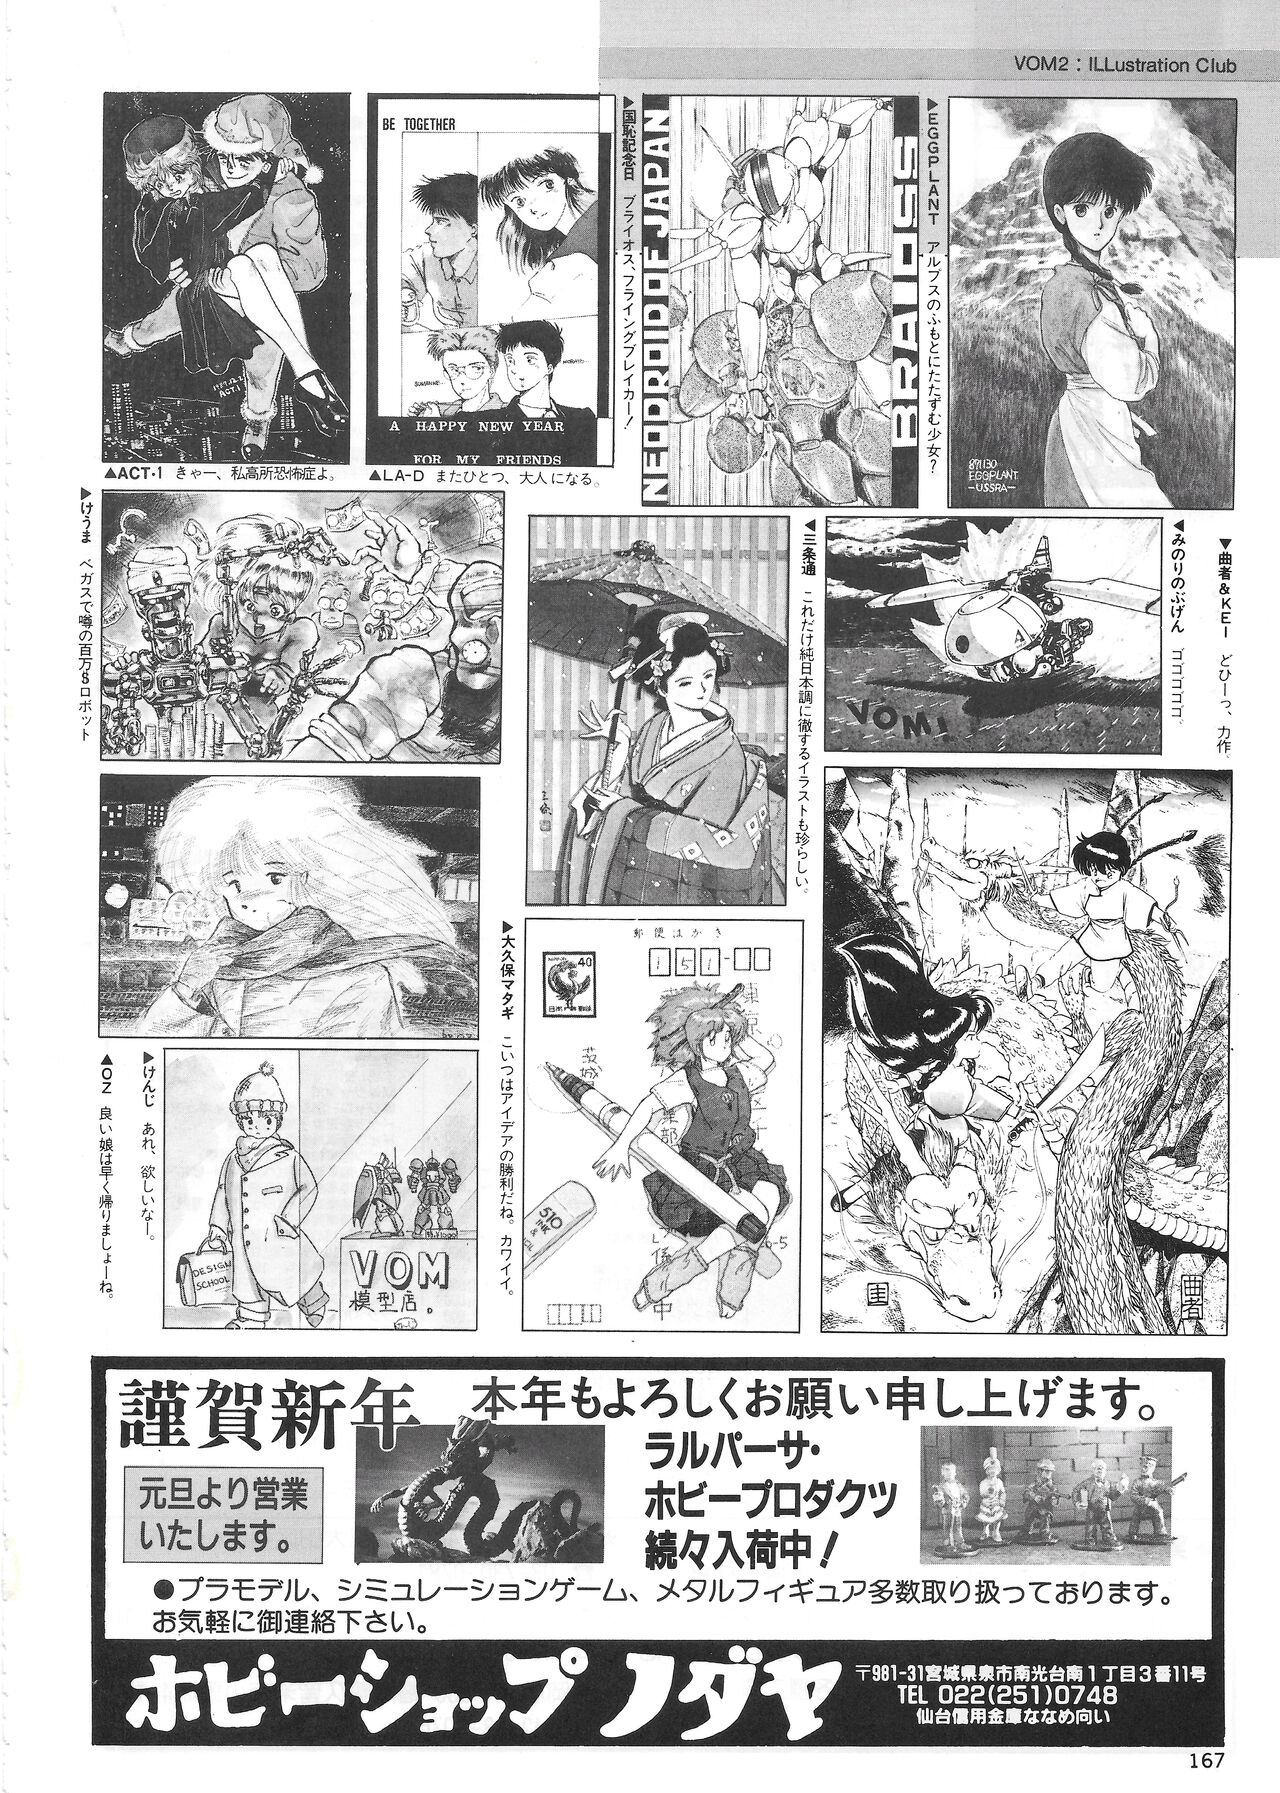 Hobby Japan Magazine 1988 Issue No.224 166